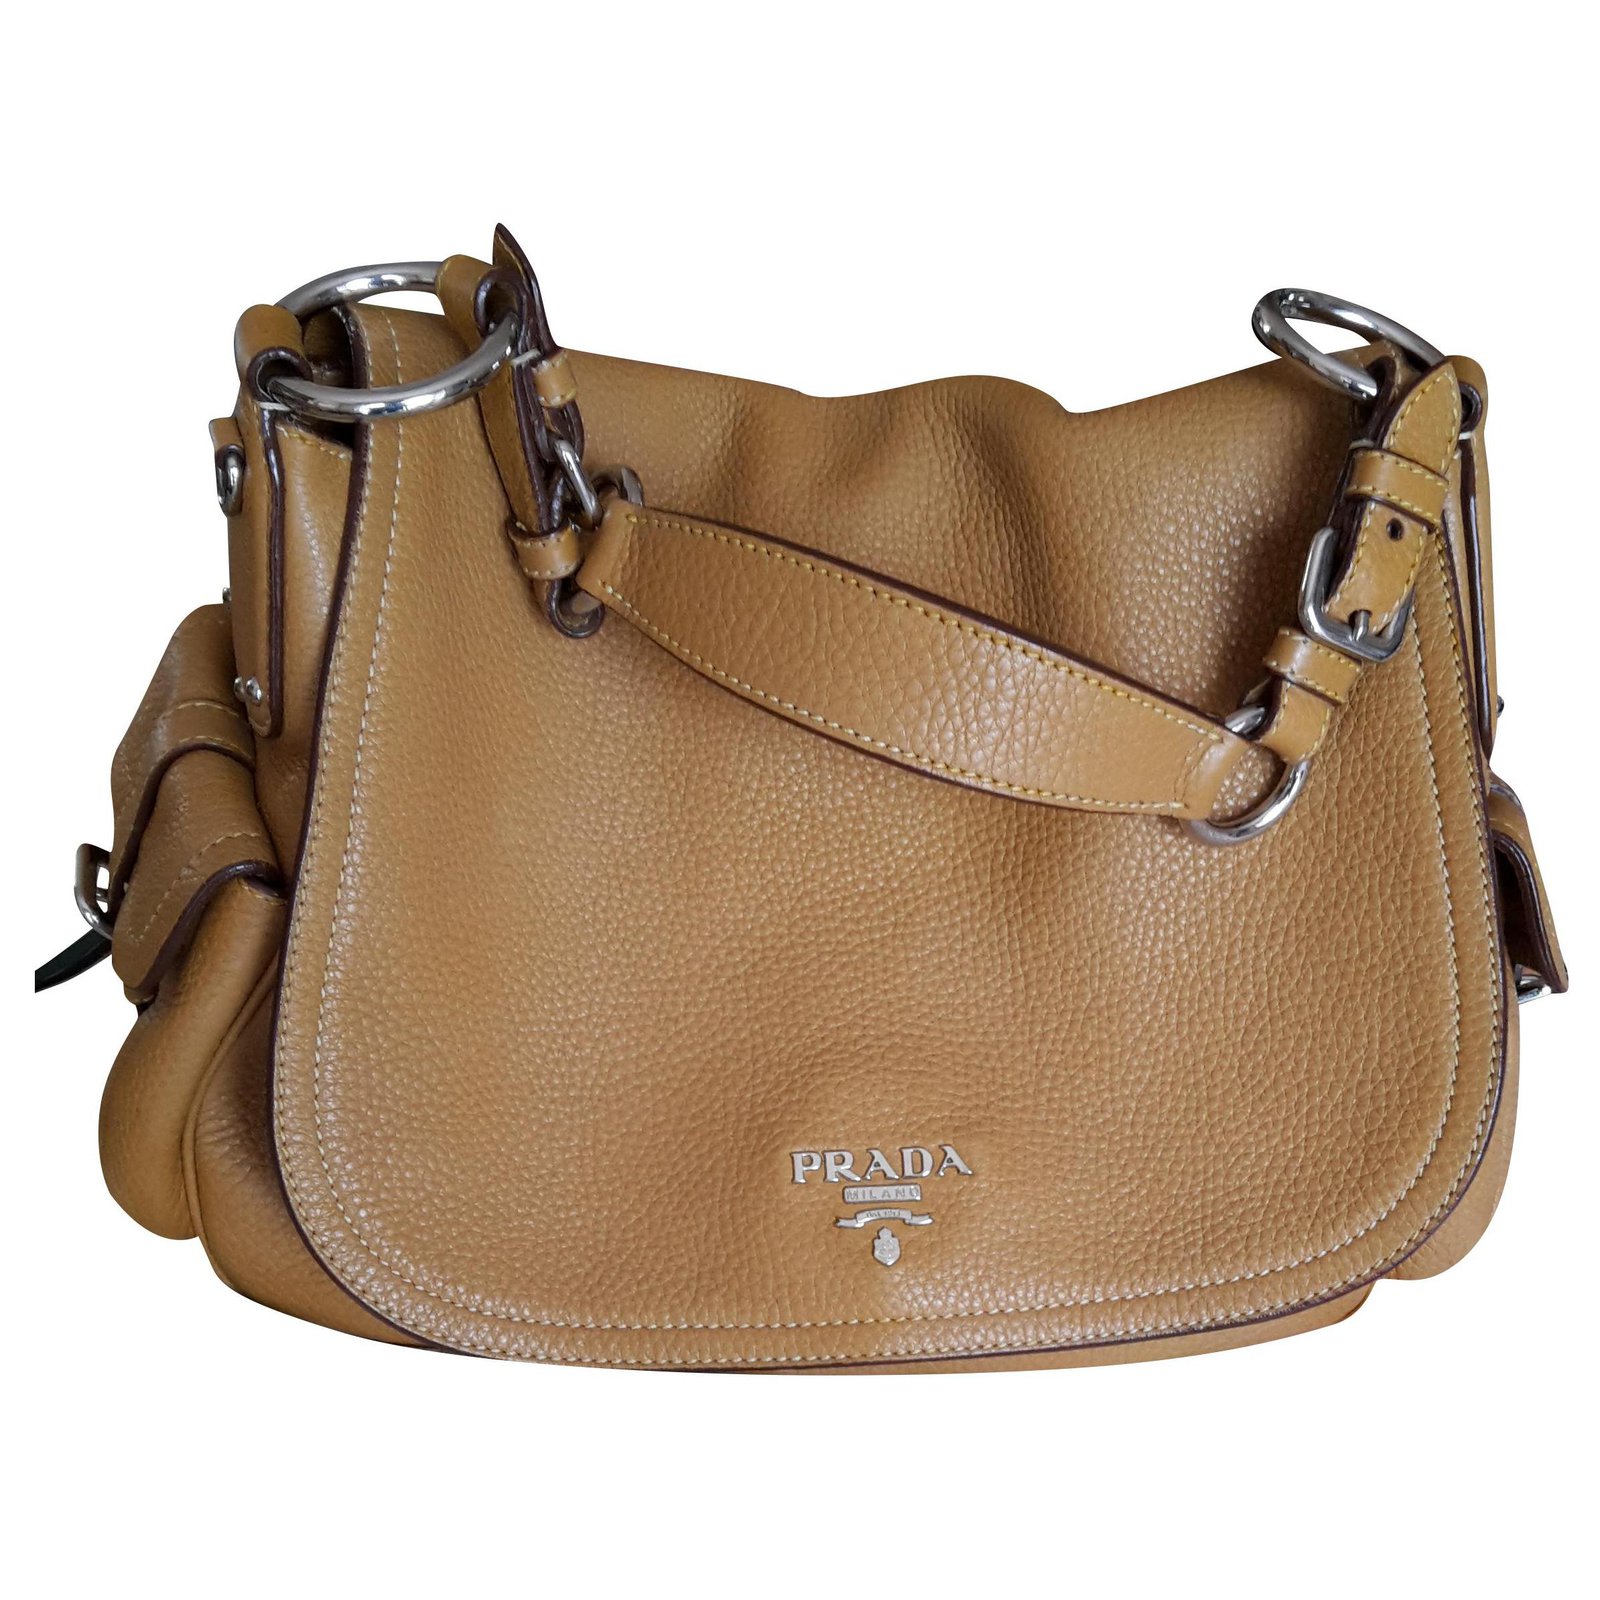 prada brown leather purse